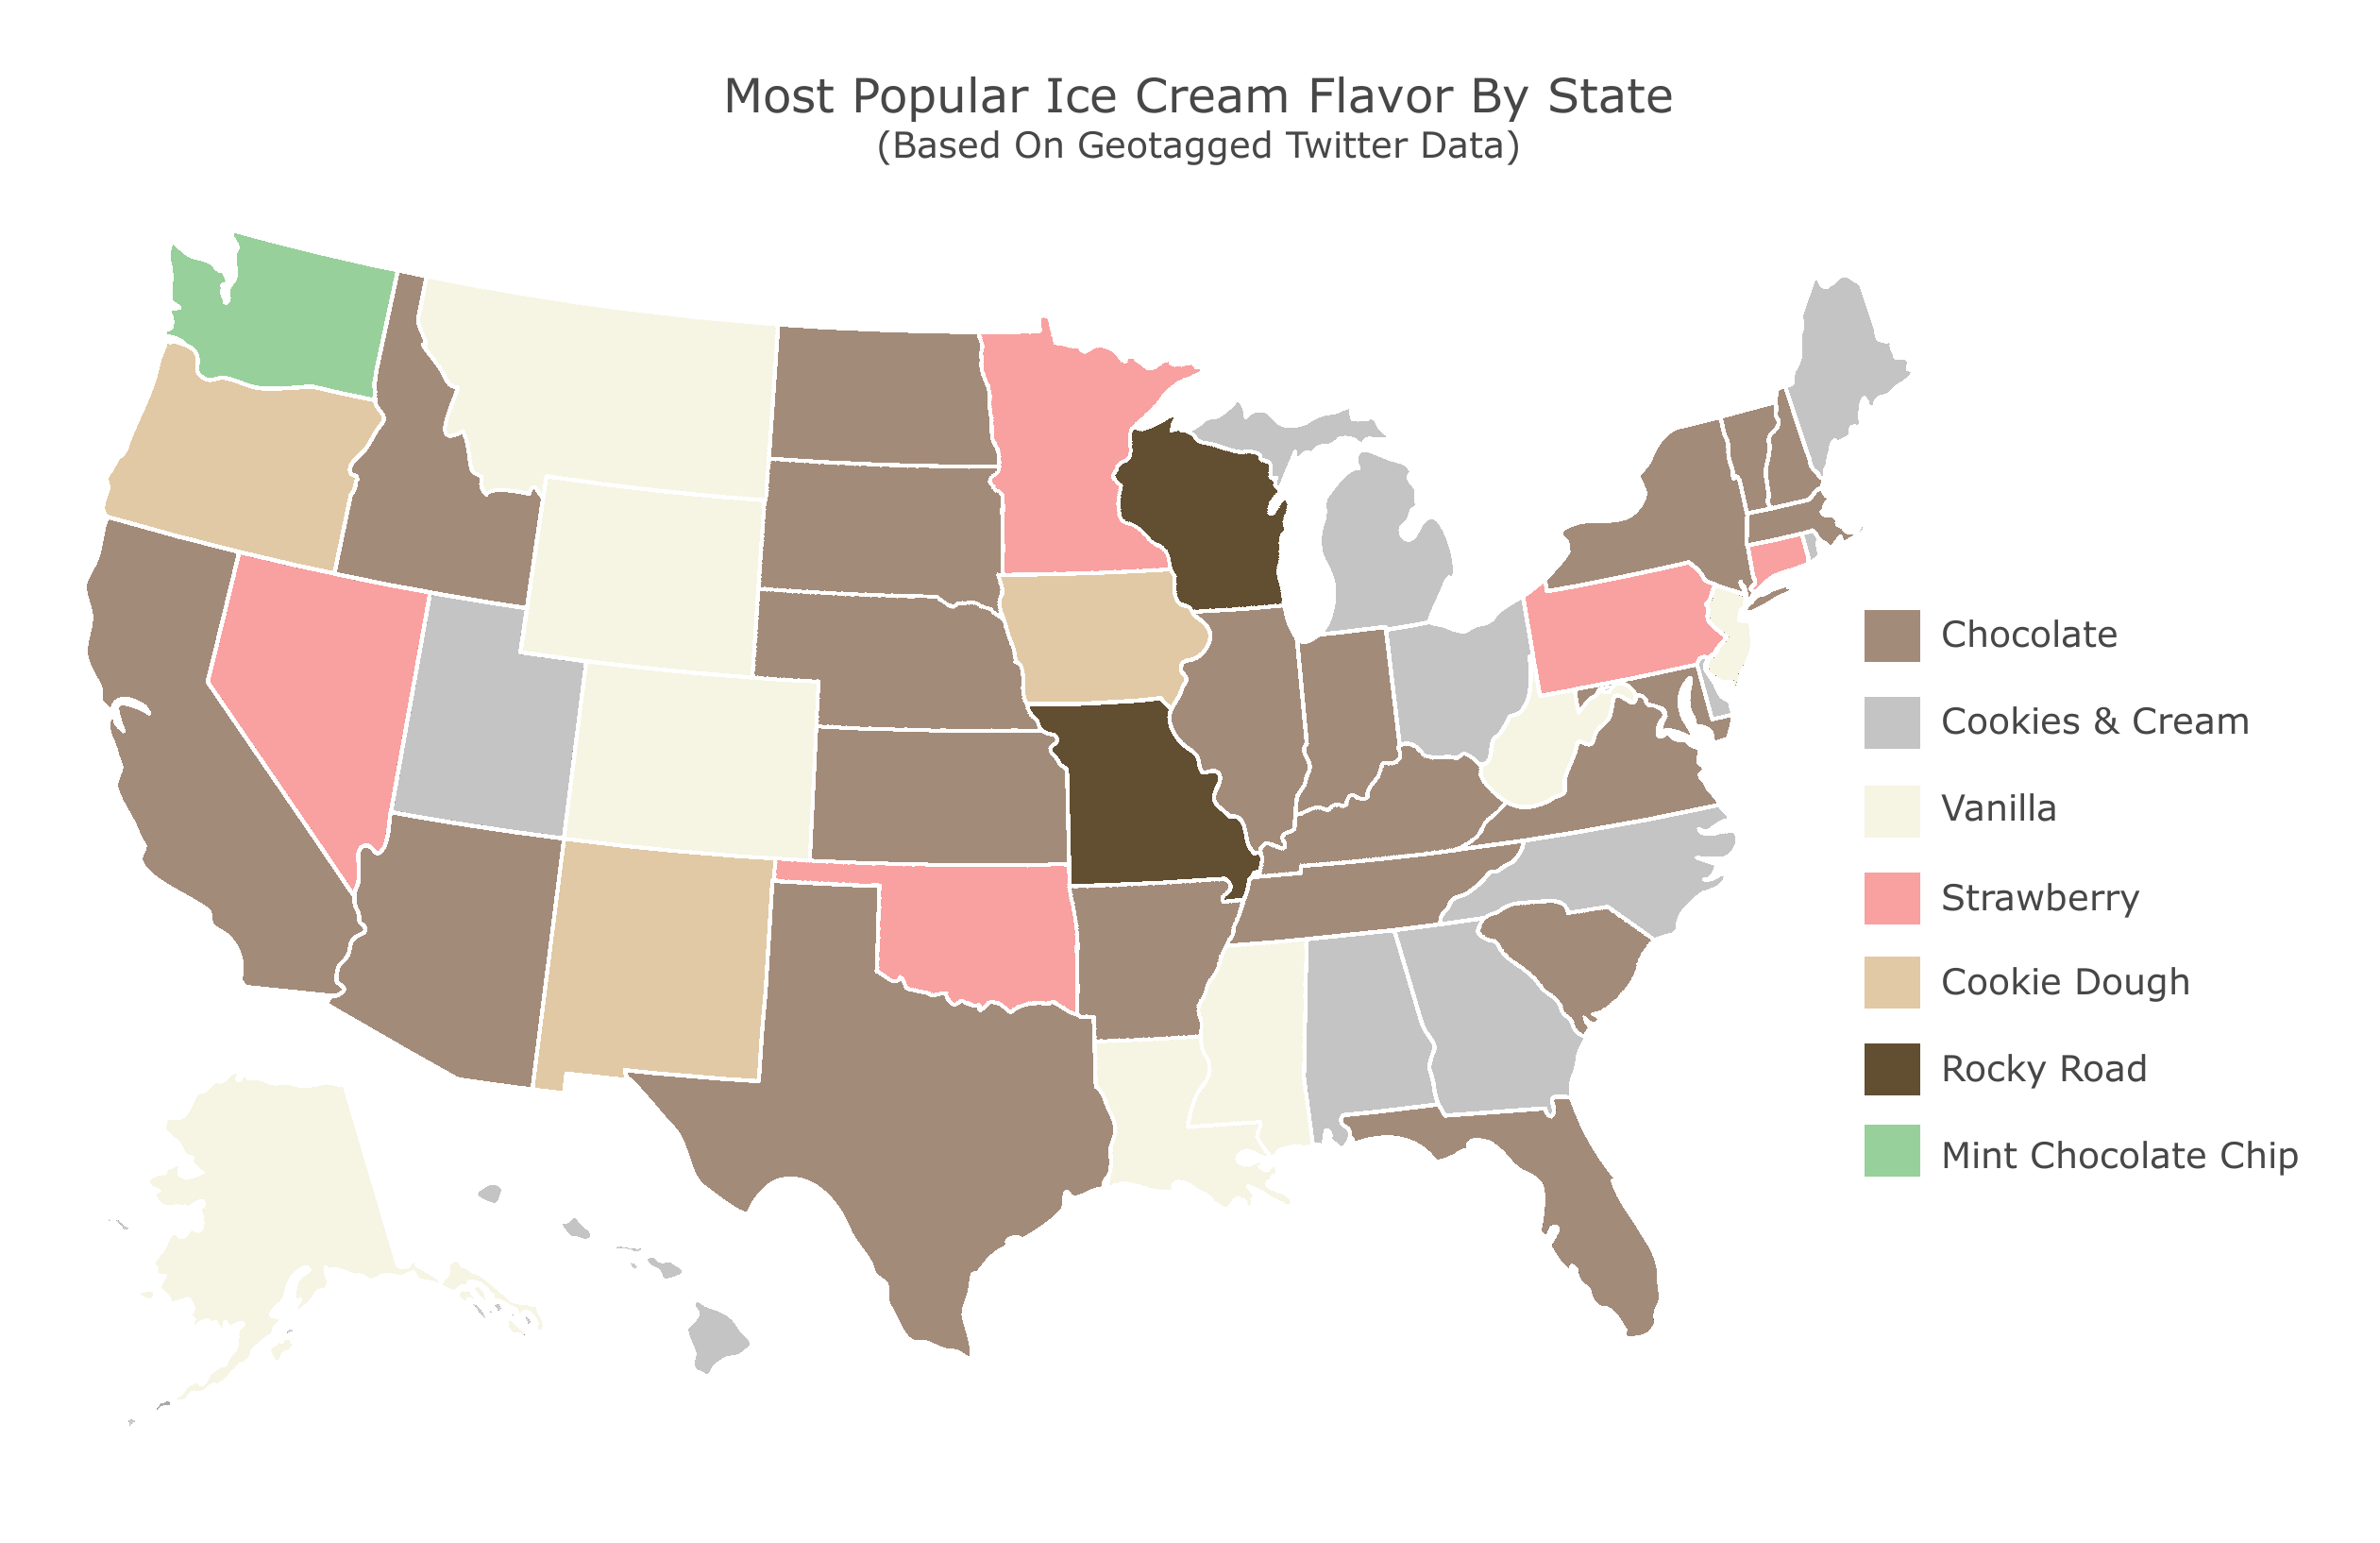 Most popular ice cream flavors